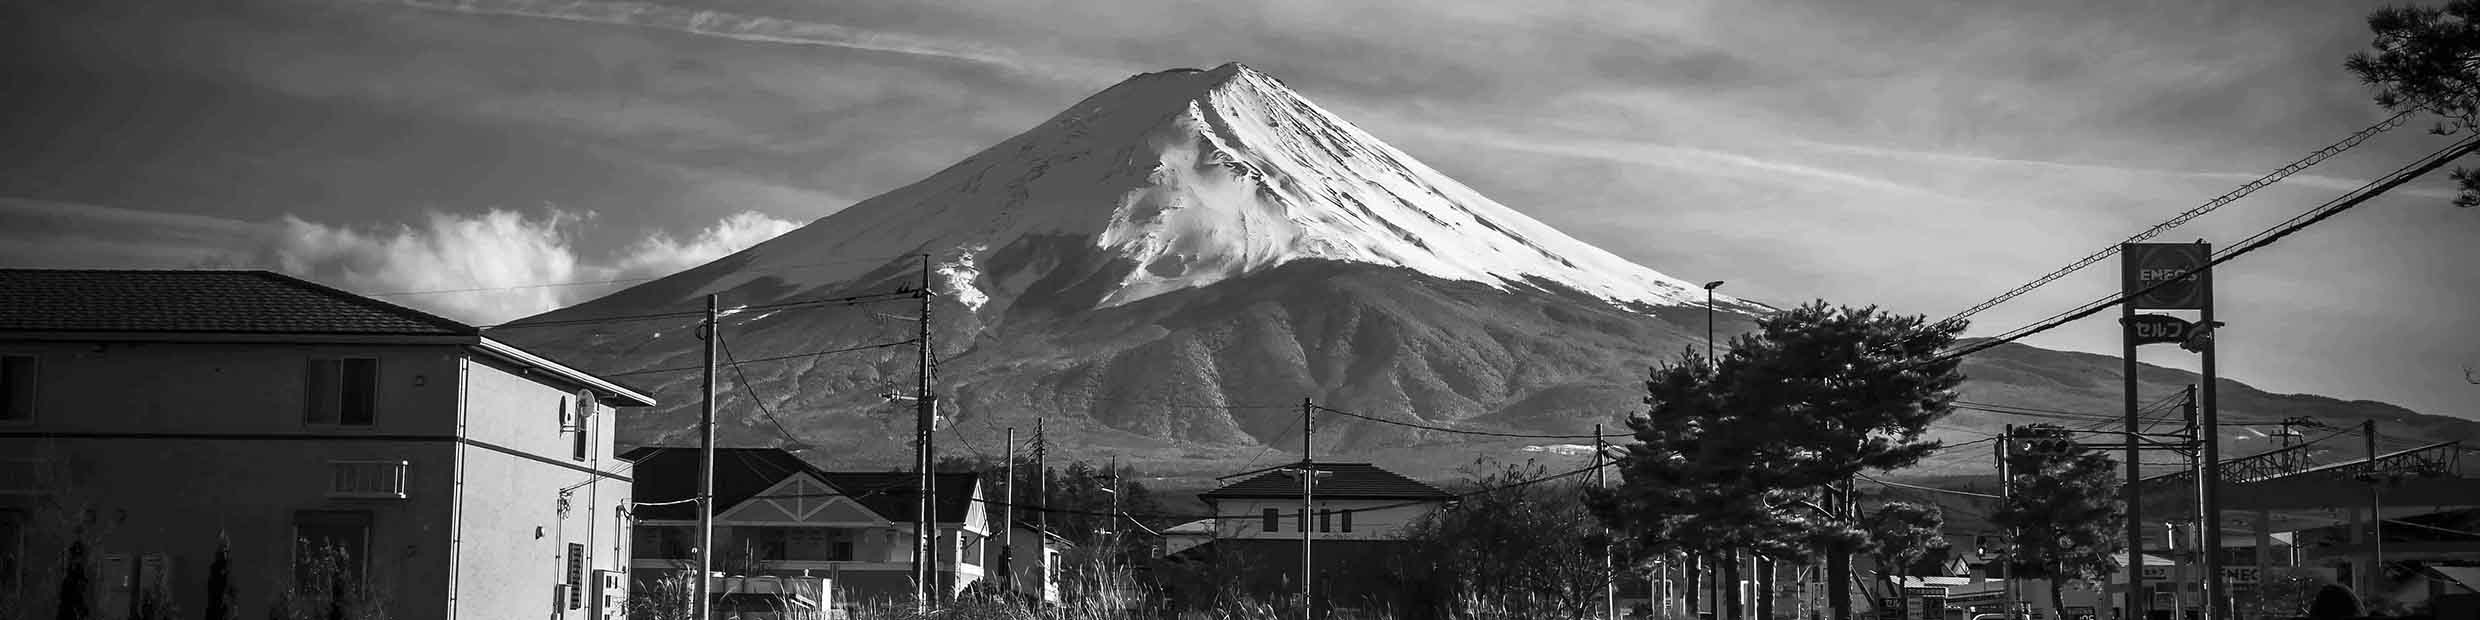 Mt.Fuji Black and White